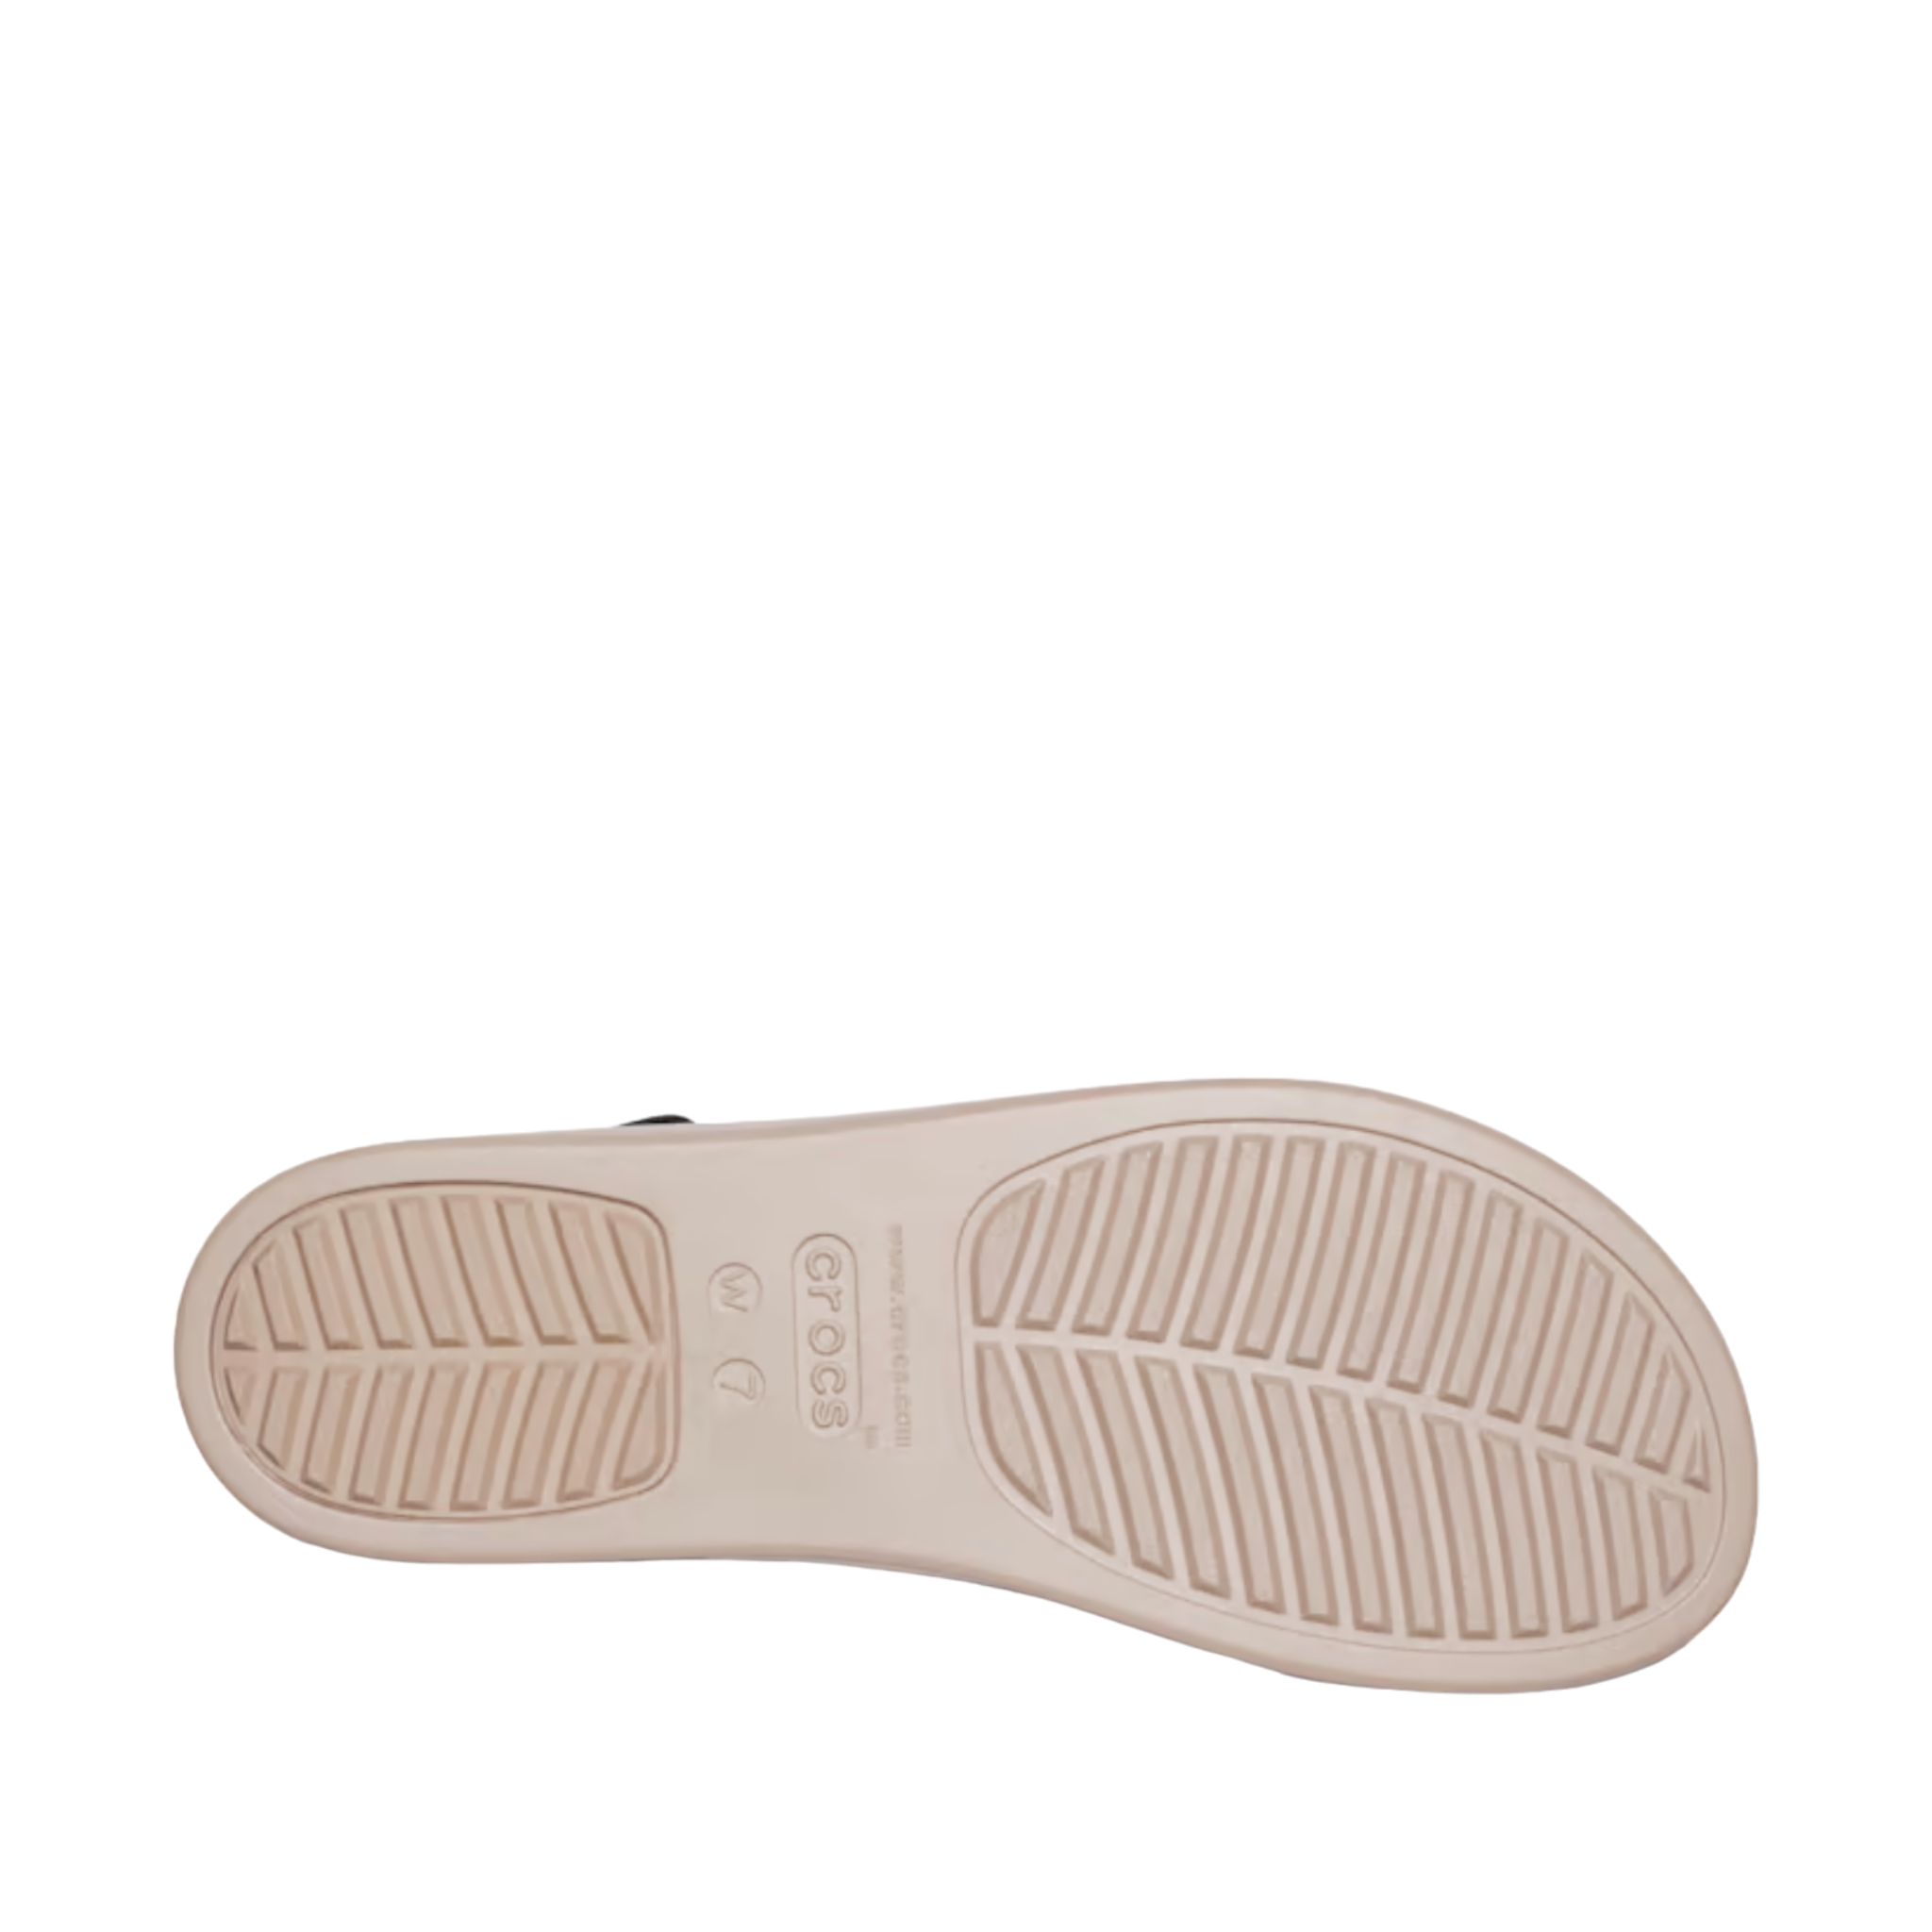 Brooklyn Low Wedge - shoe&me - Crocs - Wedge - Sandals, Wedges, Womens